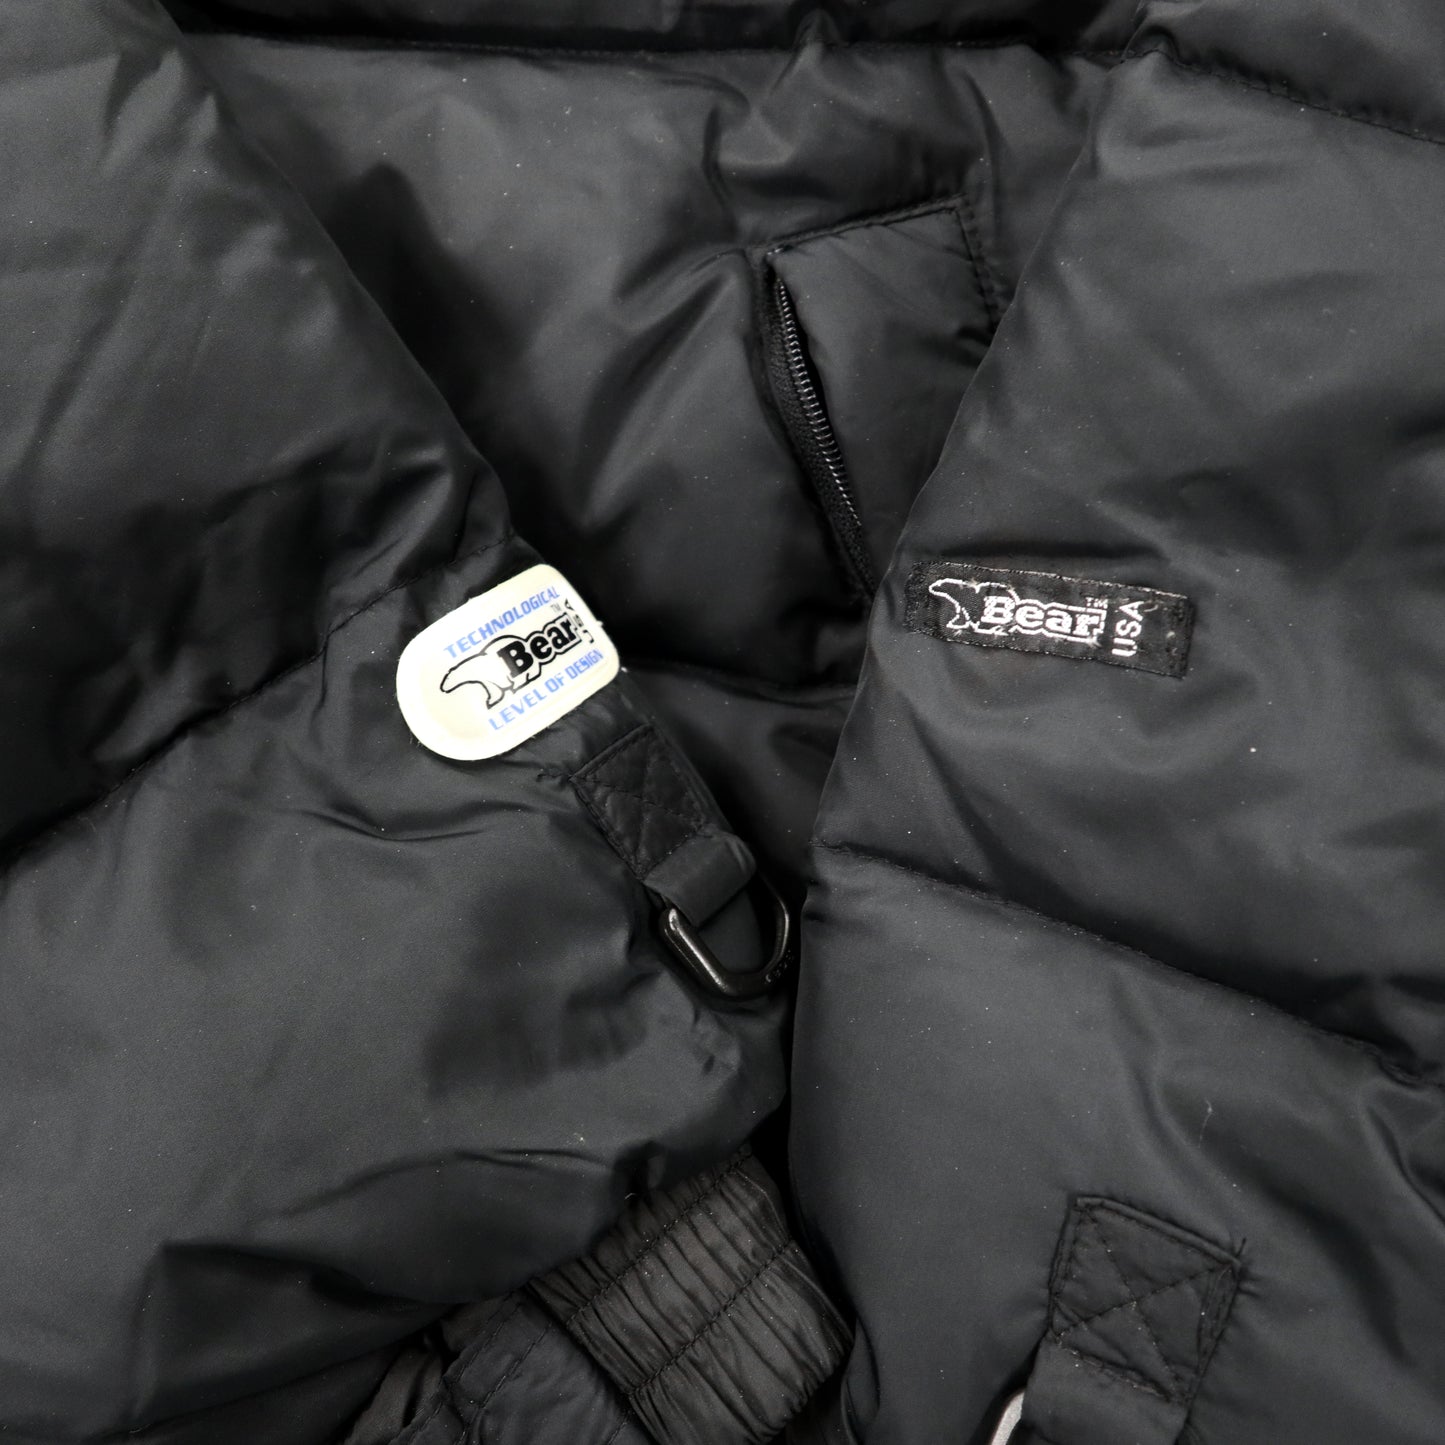 Bear USA 90's Reversible Puffer Jacket XL Black Yellow – 日本然リトテ